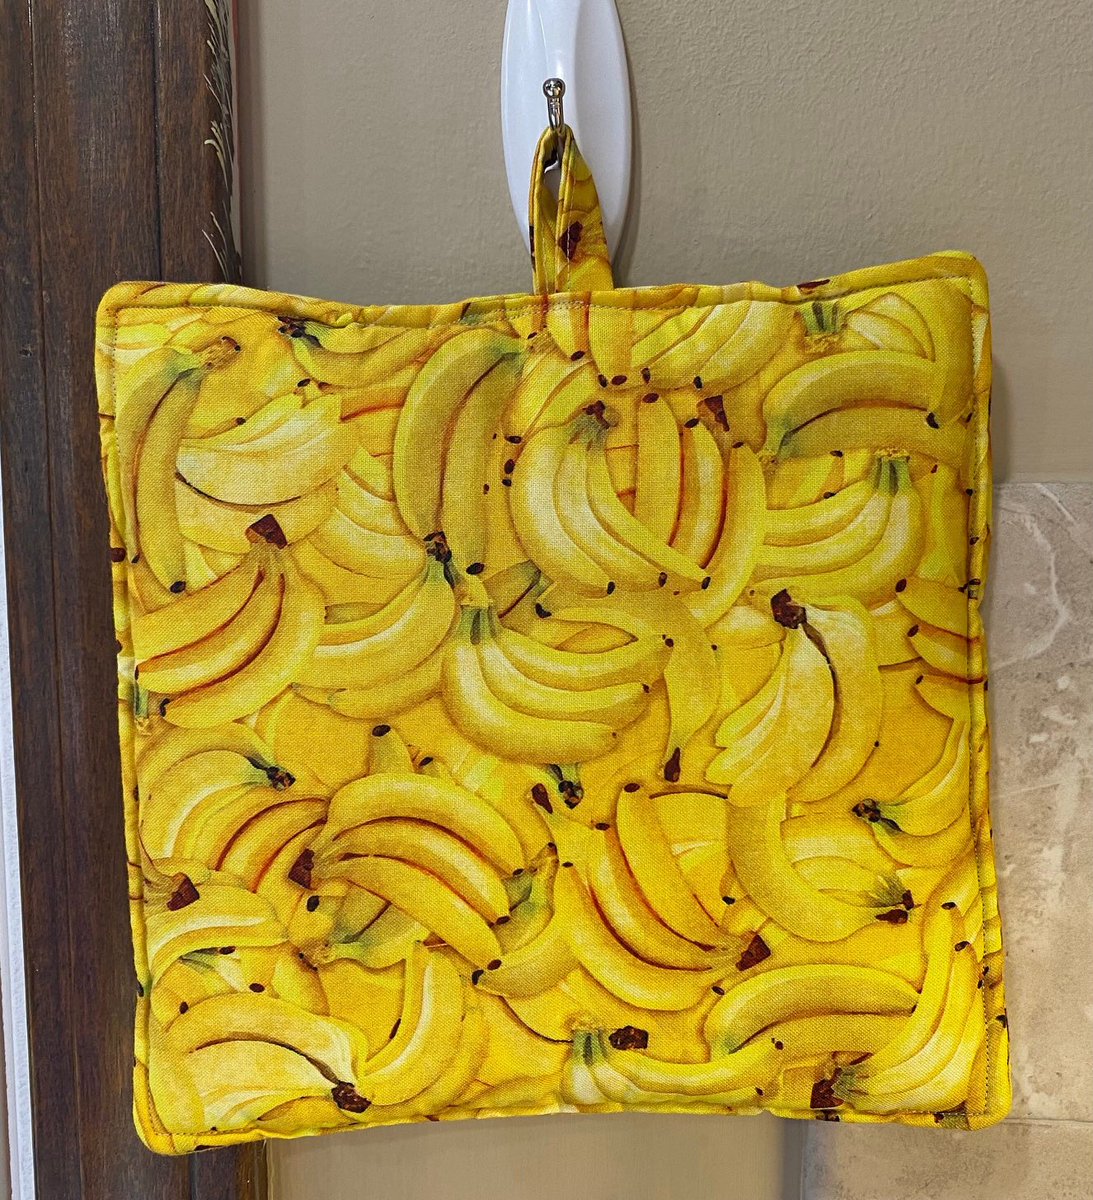 Banana themed potholders available. foreverhomequilts.etsy.com/listing/171370… 🍌🍌#etsy #banana #fruit #kitchen #potholder #cooking #baking